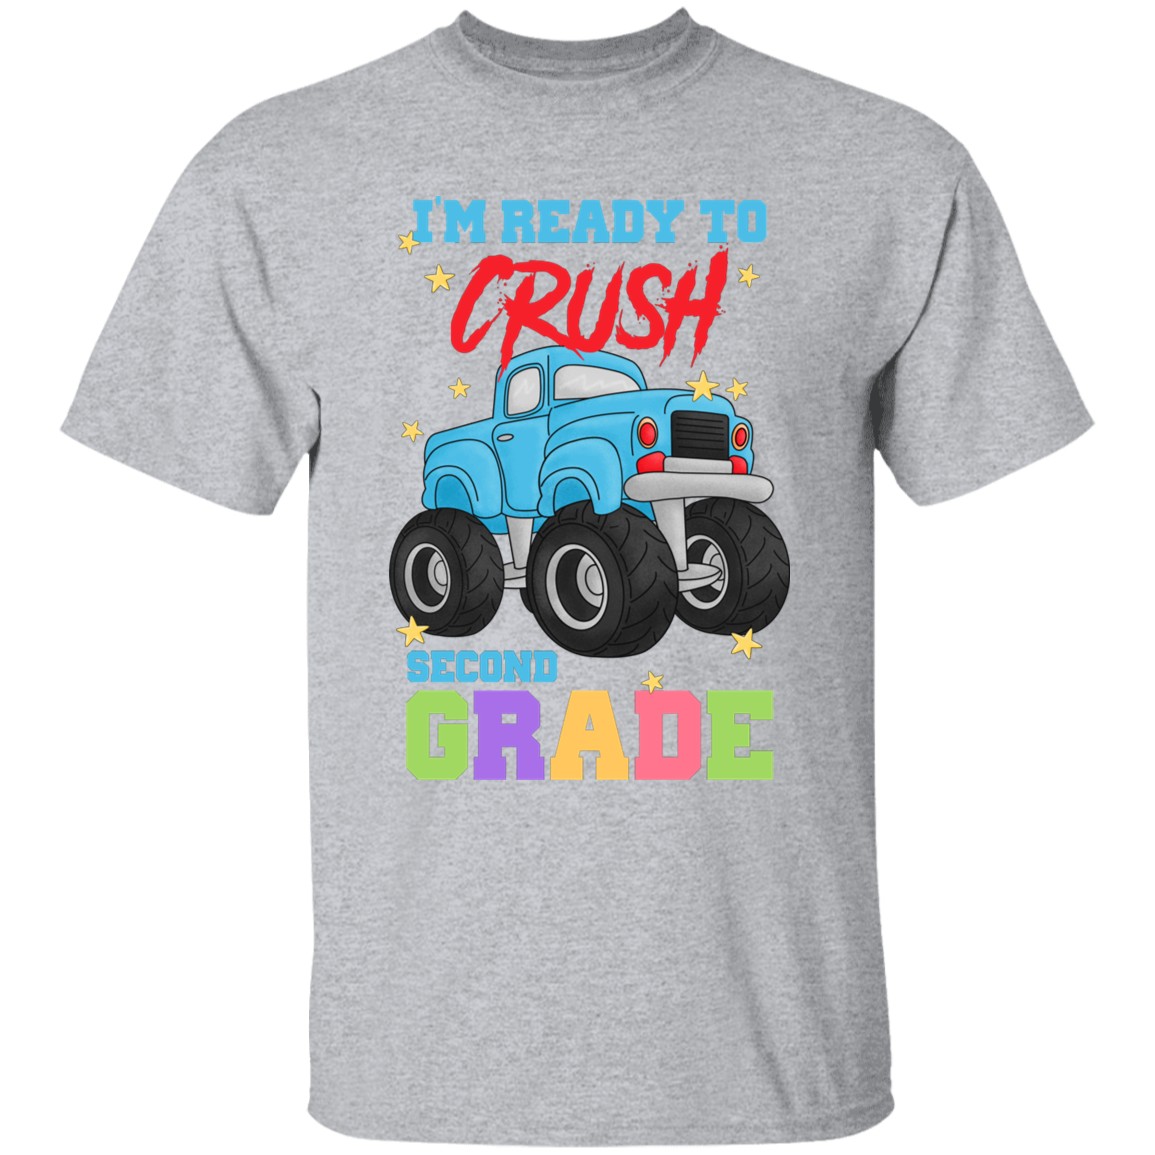 Crush Second Grade Youth Cotton T-Shirt